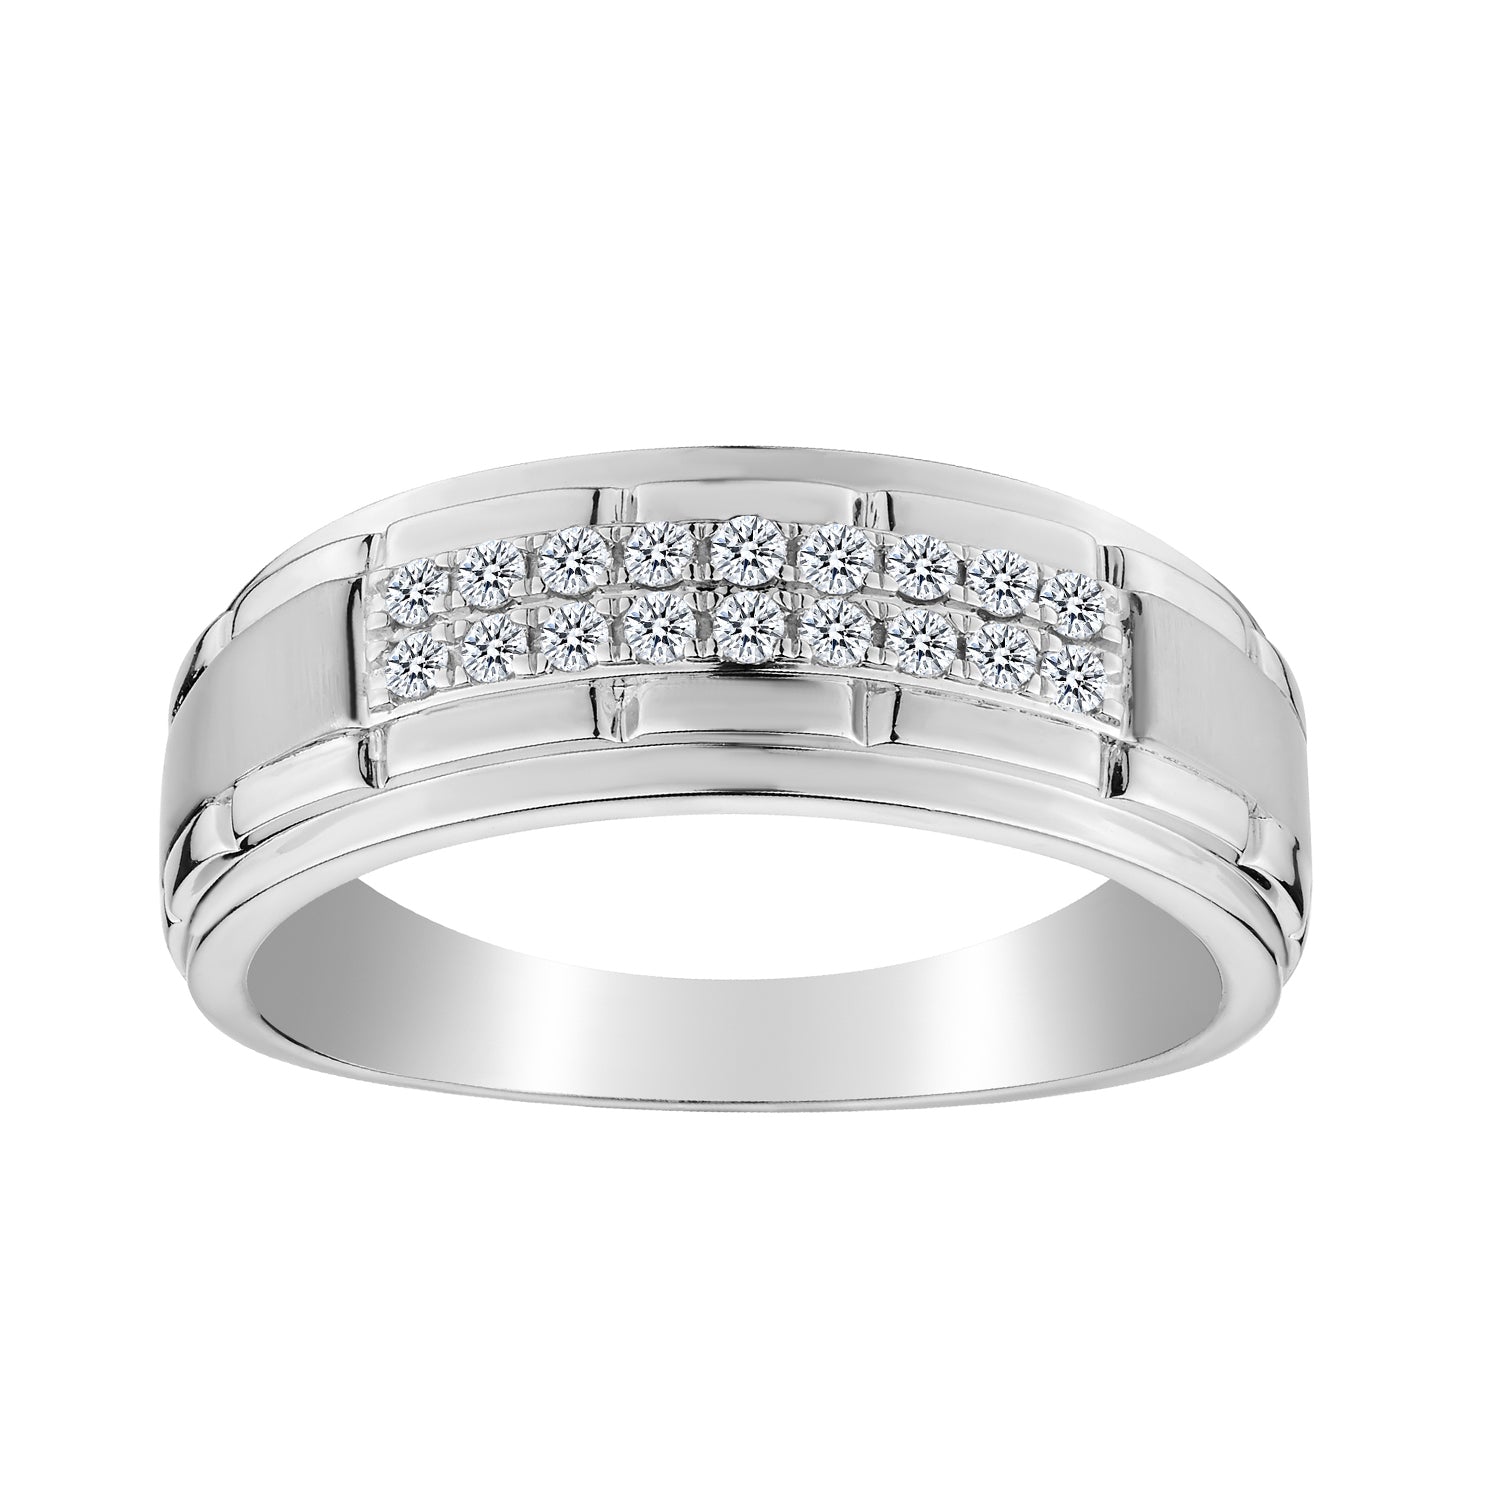 .25 Carat of Diamonds Gentleman's Ring, 10kt White Gold….....................NOW